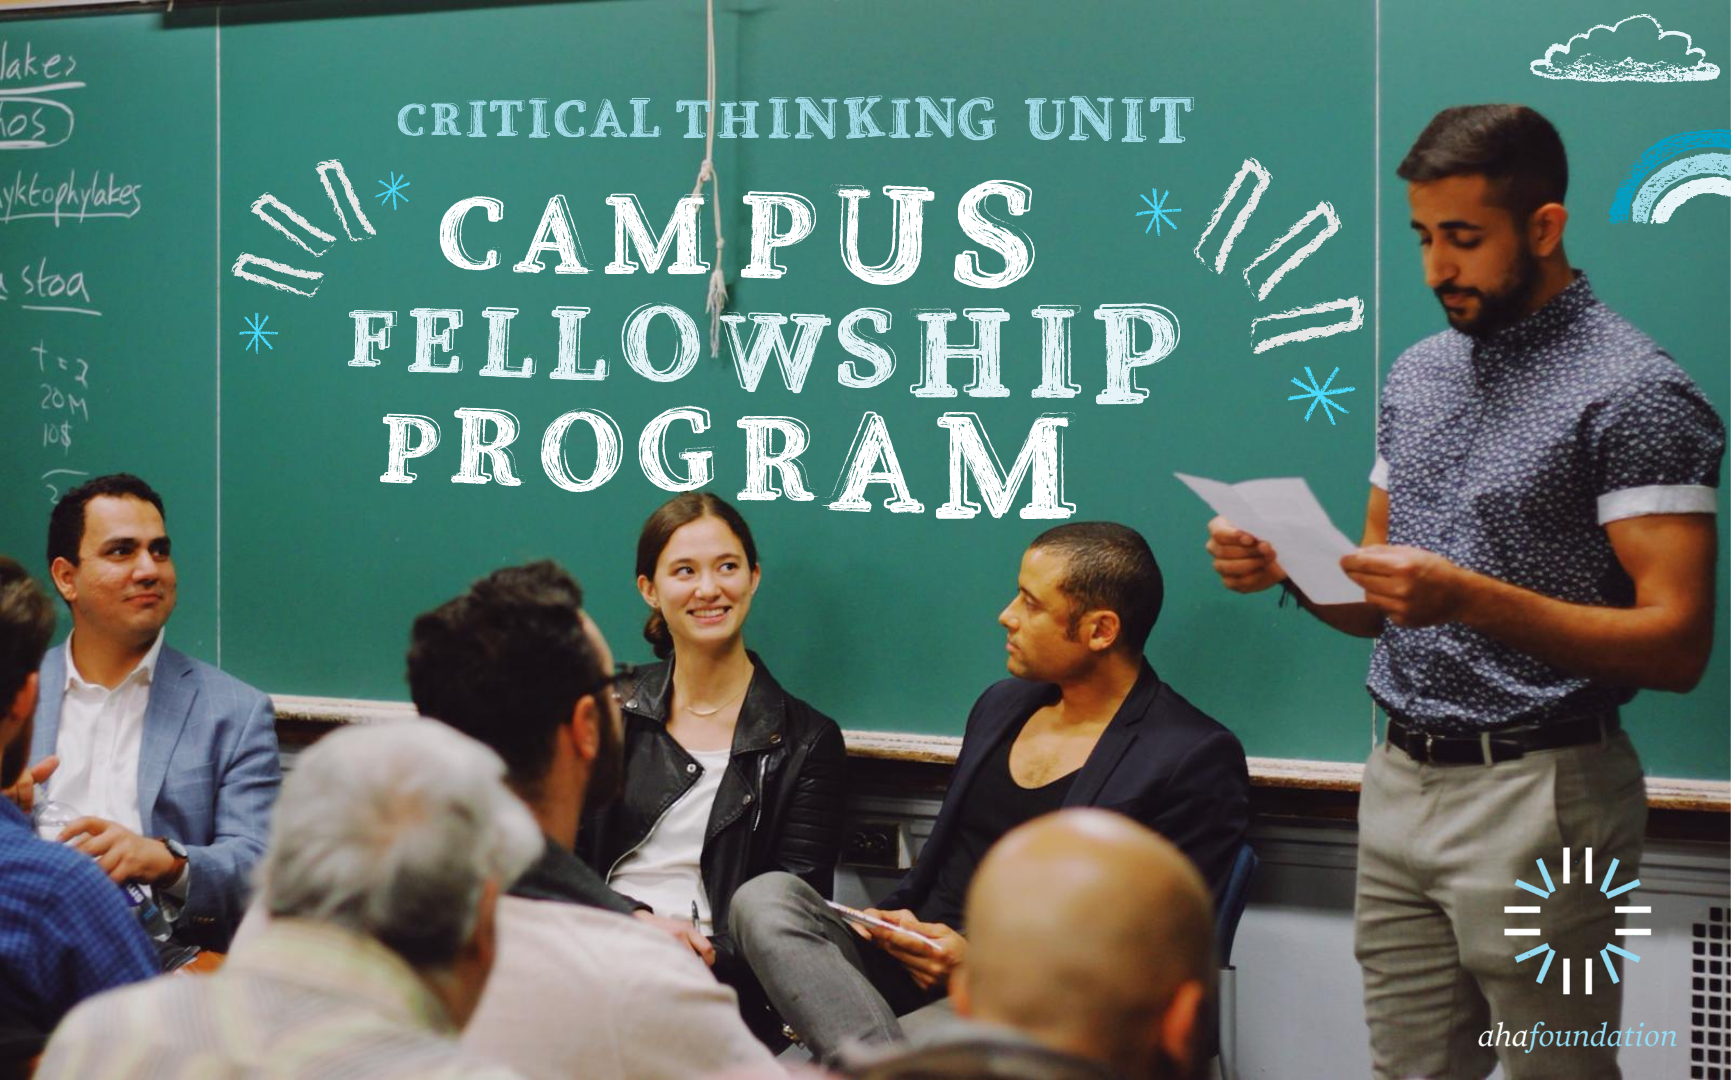 Critical Thinking Fellowship Campus Program - Fellowship Applications